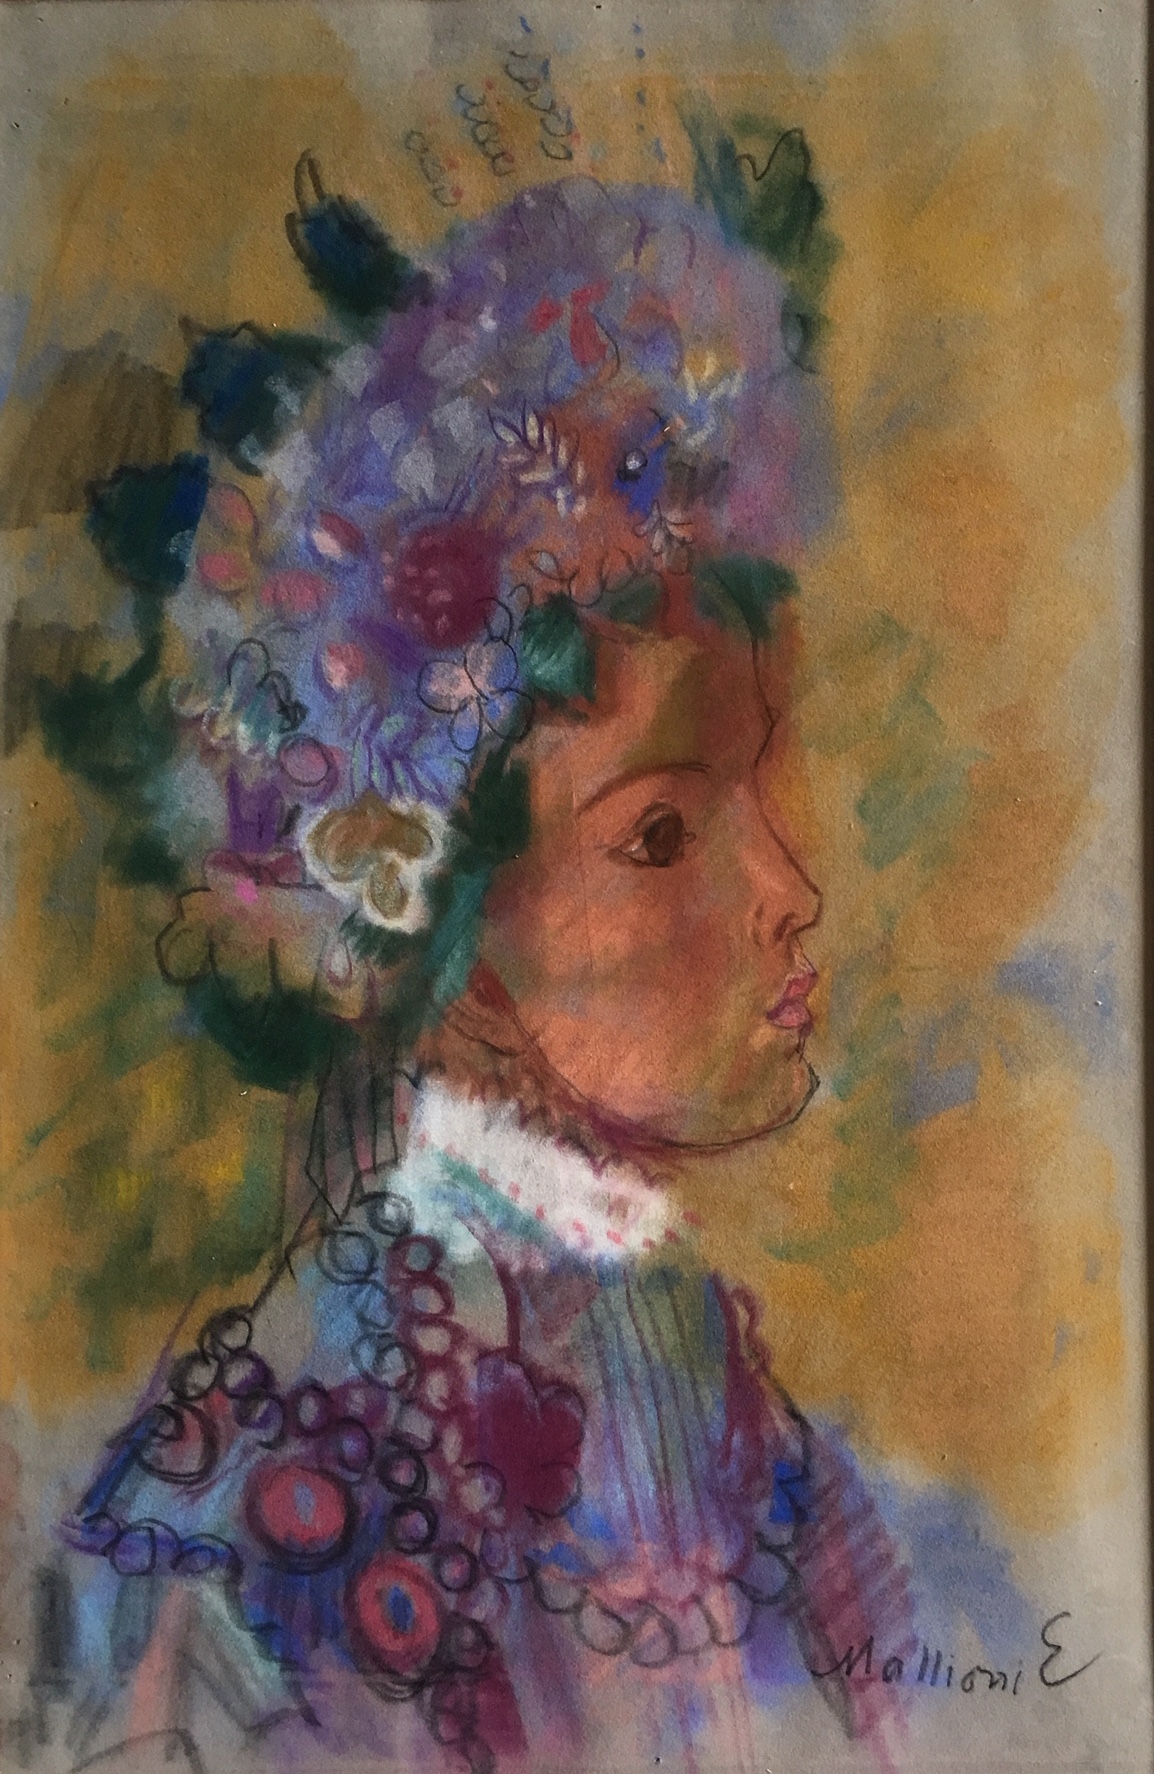 Mattioni, Eszter: Female portrait with crown